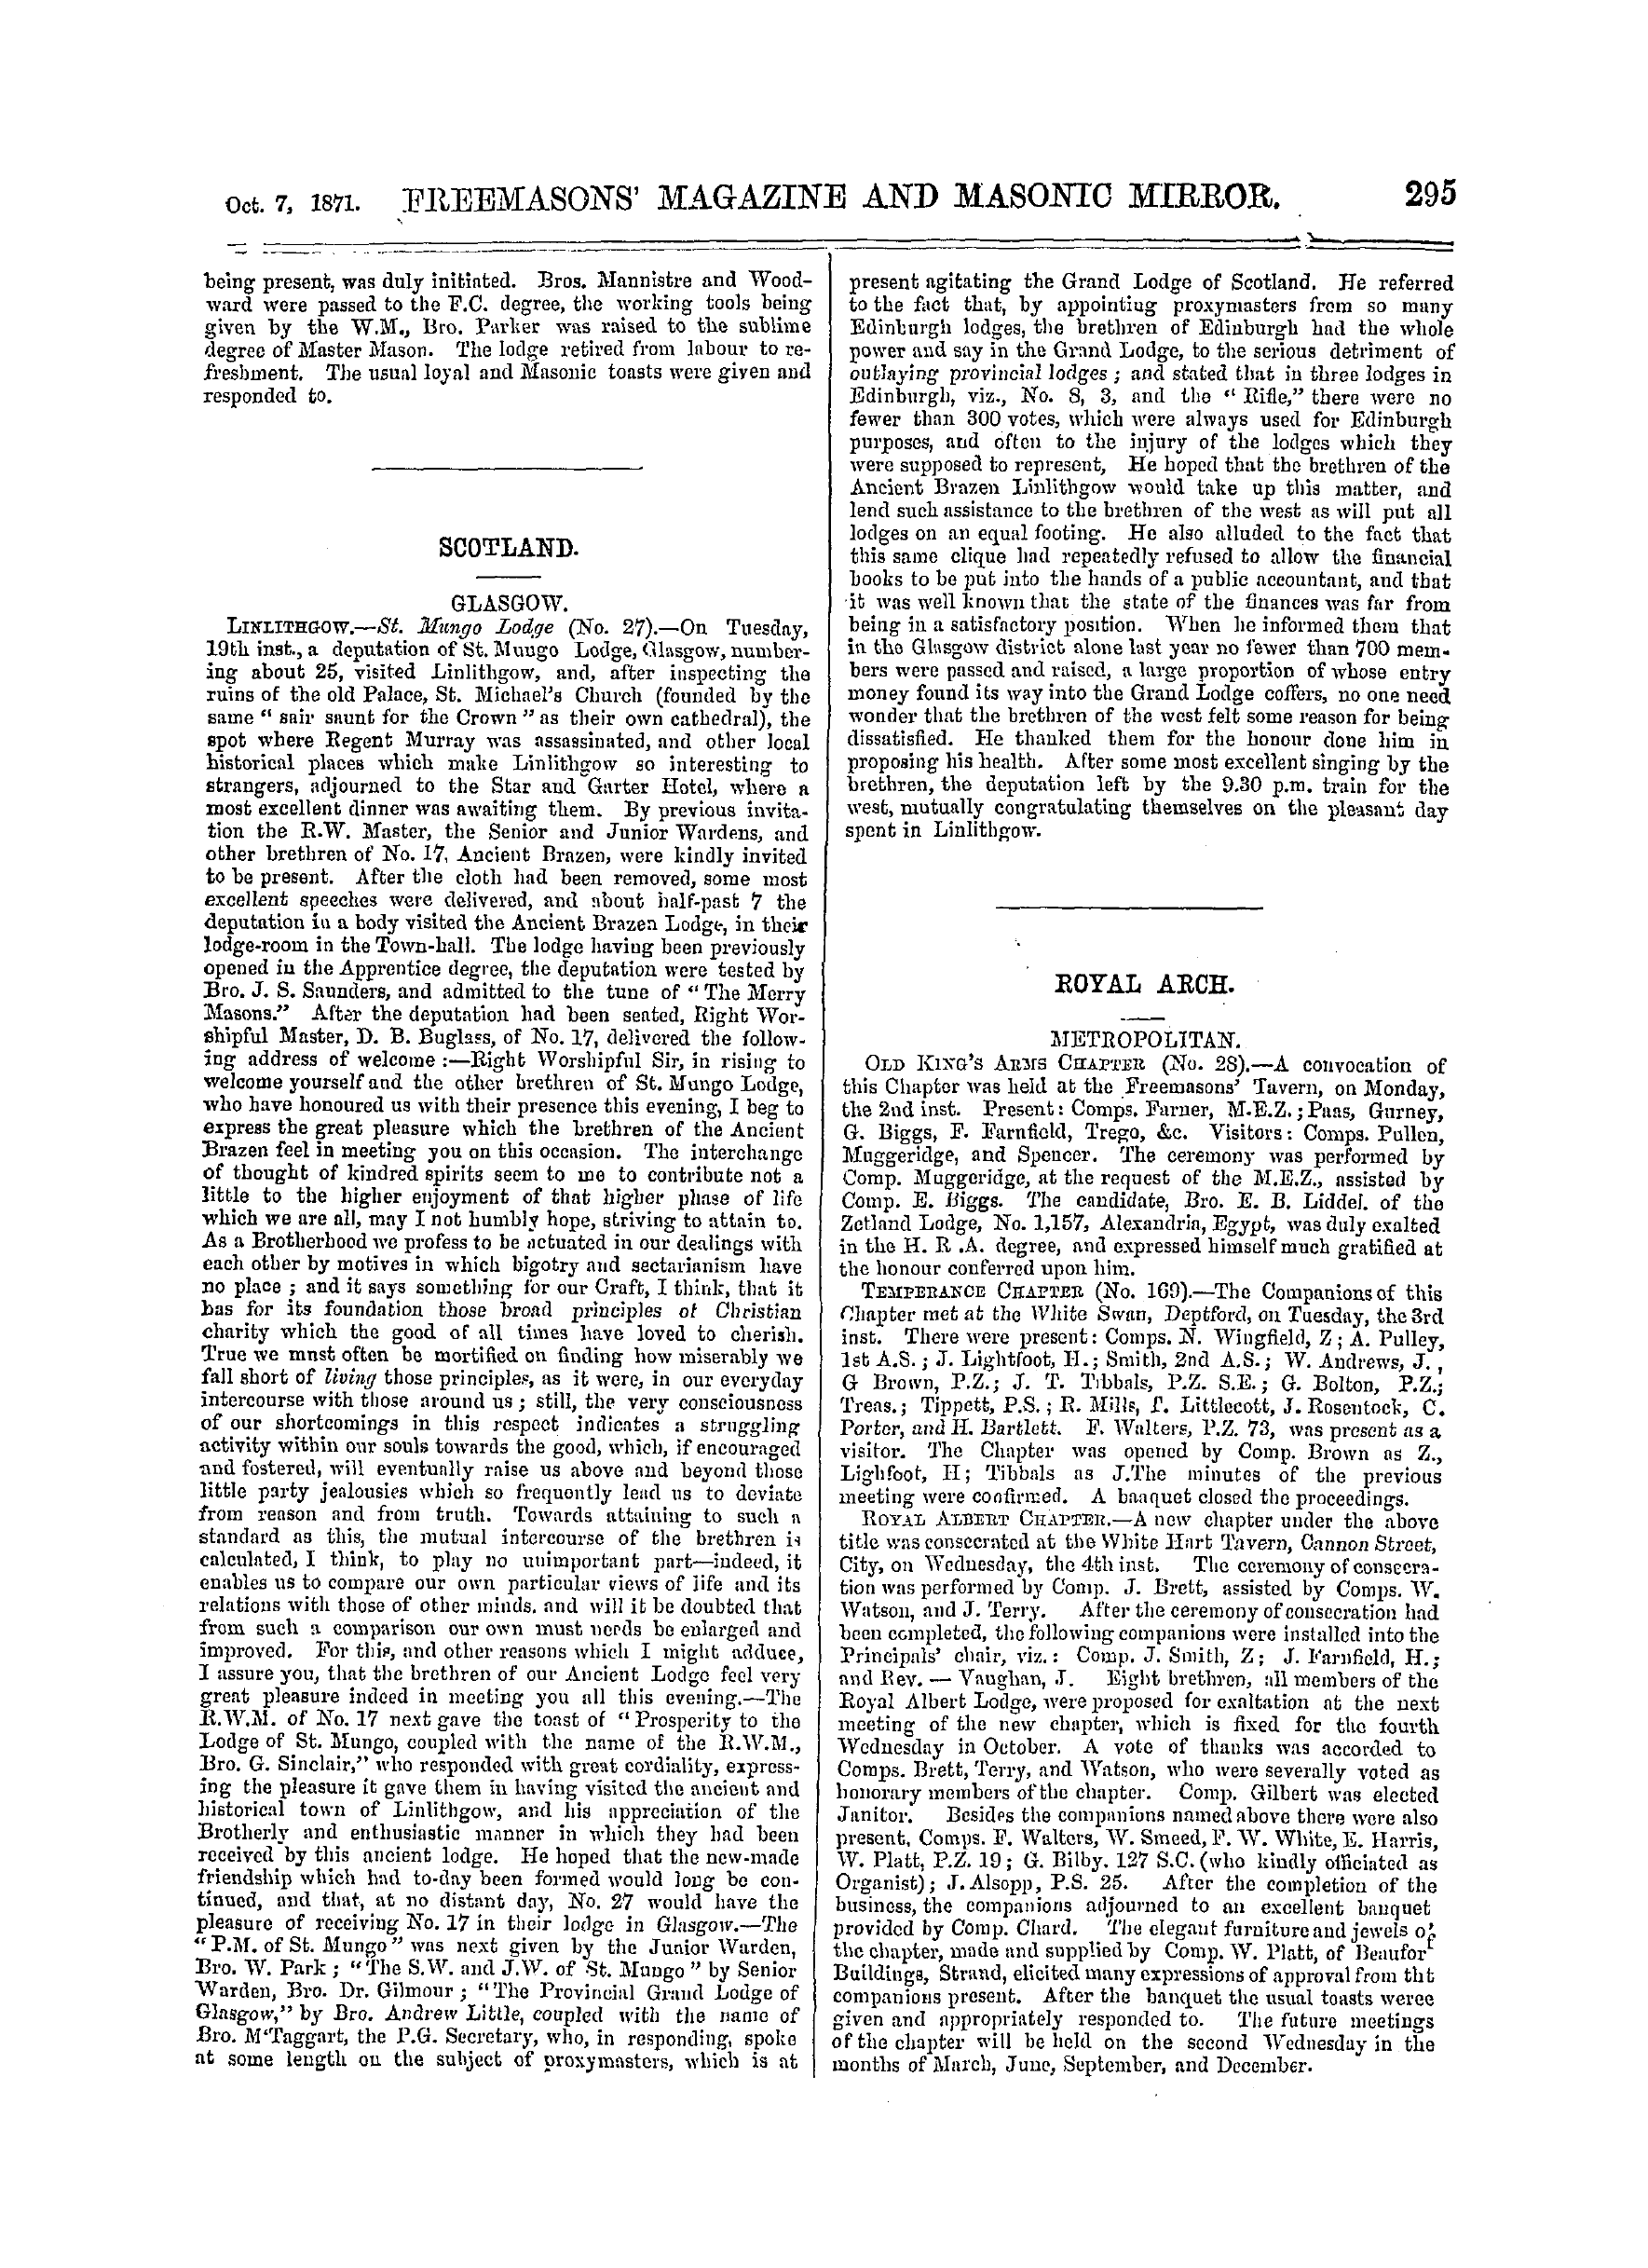 The Freemasons' Monthly Magazine: 1871-10-07 - Royal Arch.